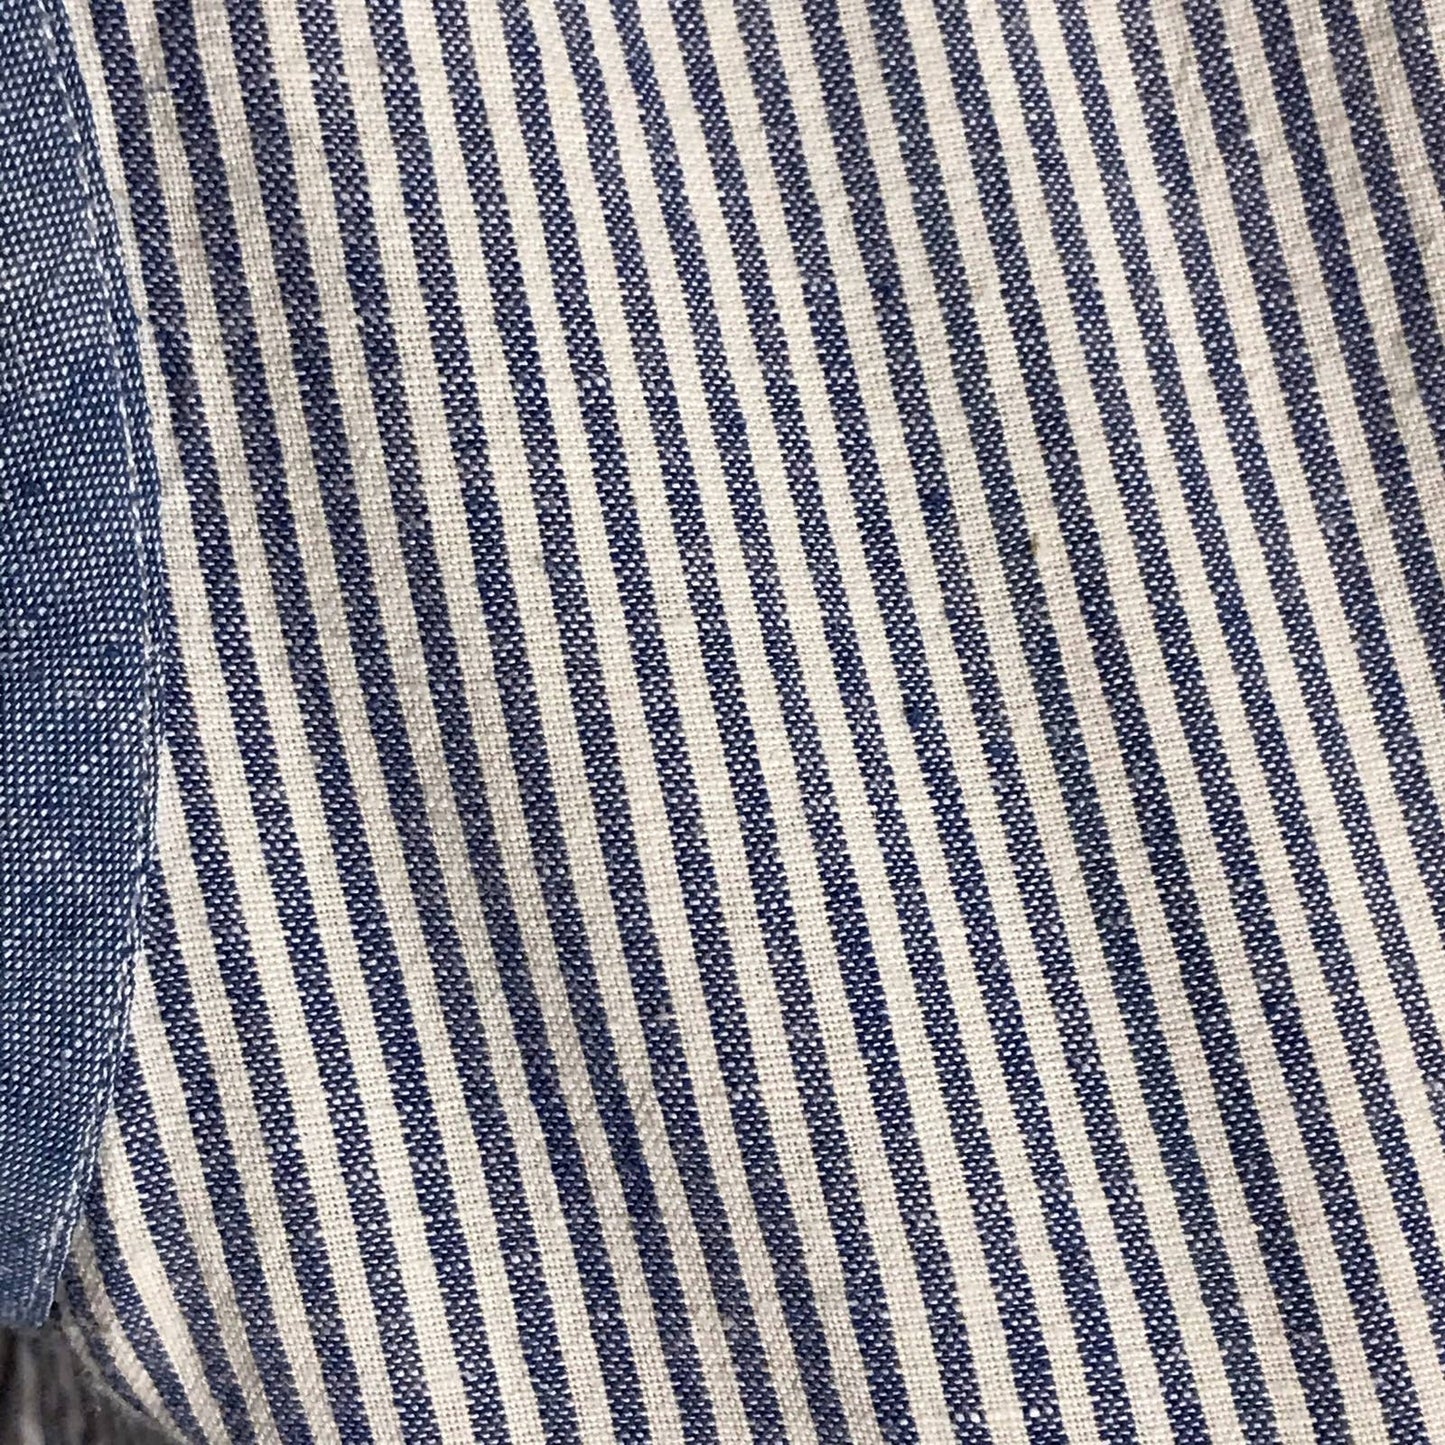 Vintage 90s Blue Striped Cotton Sleeveless Top Simrin Volup Size 14